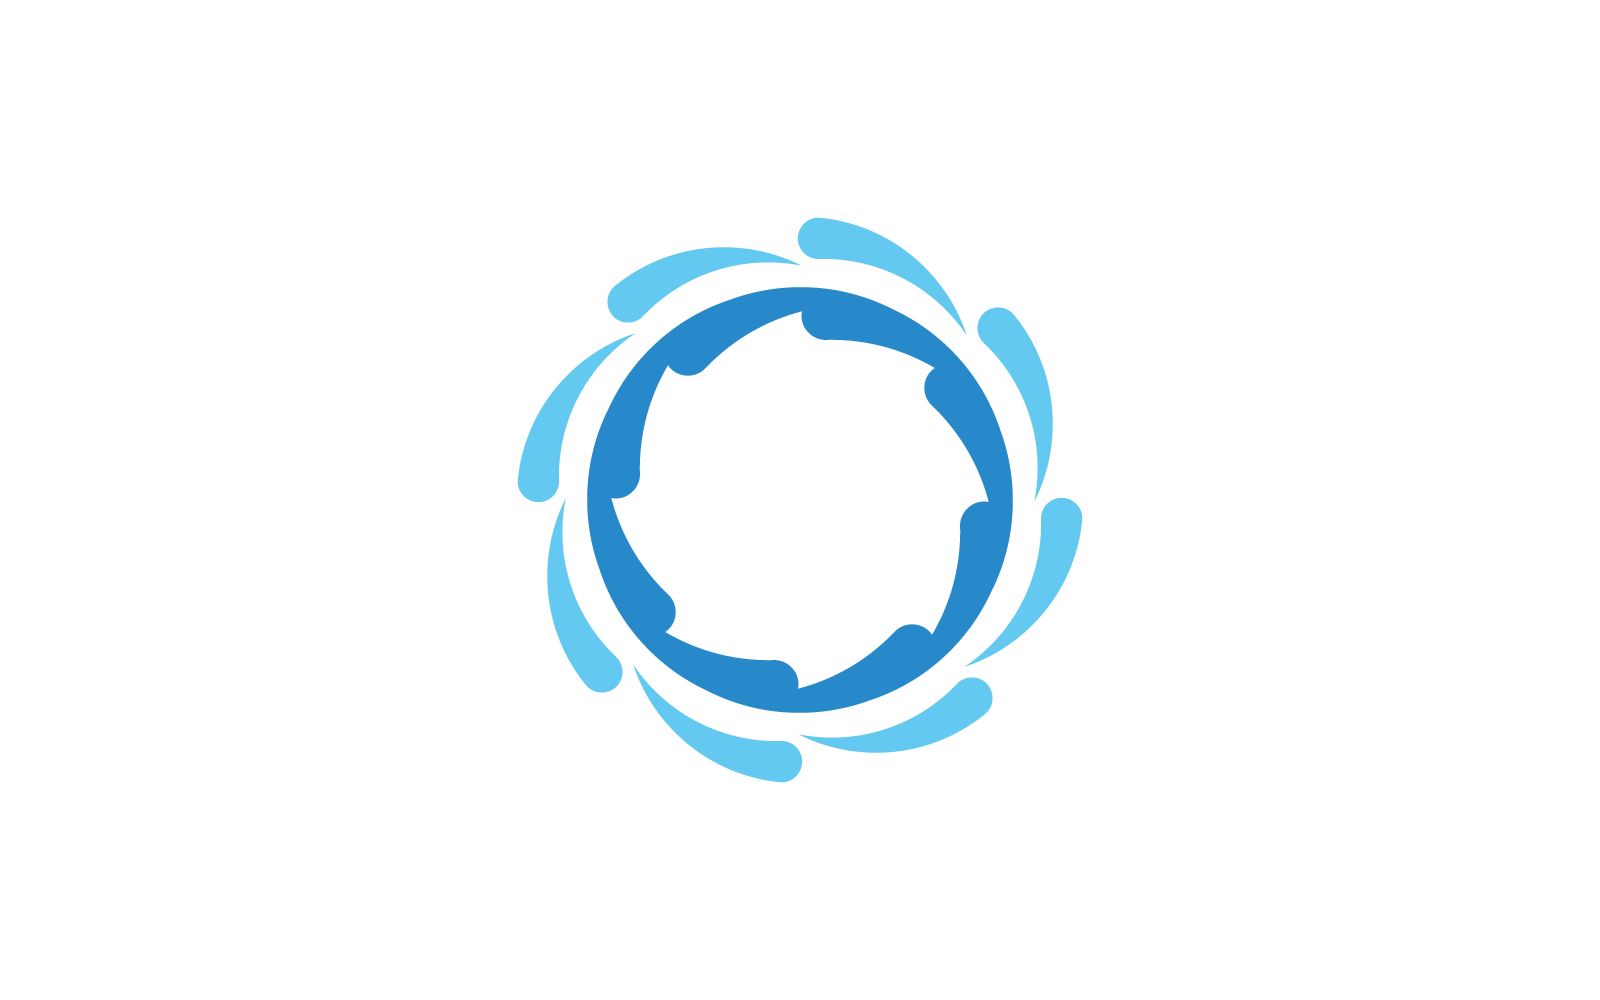 Business logo, vortex, wave and spiral icon vector